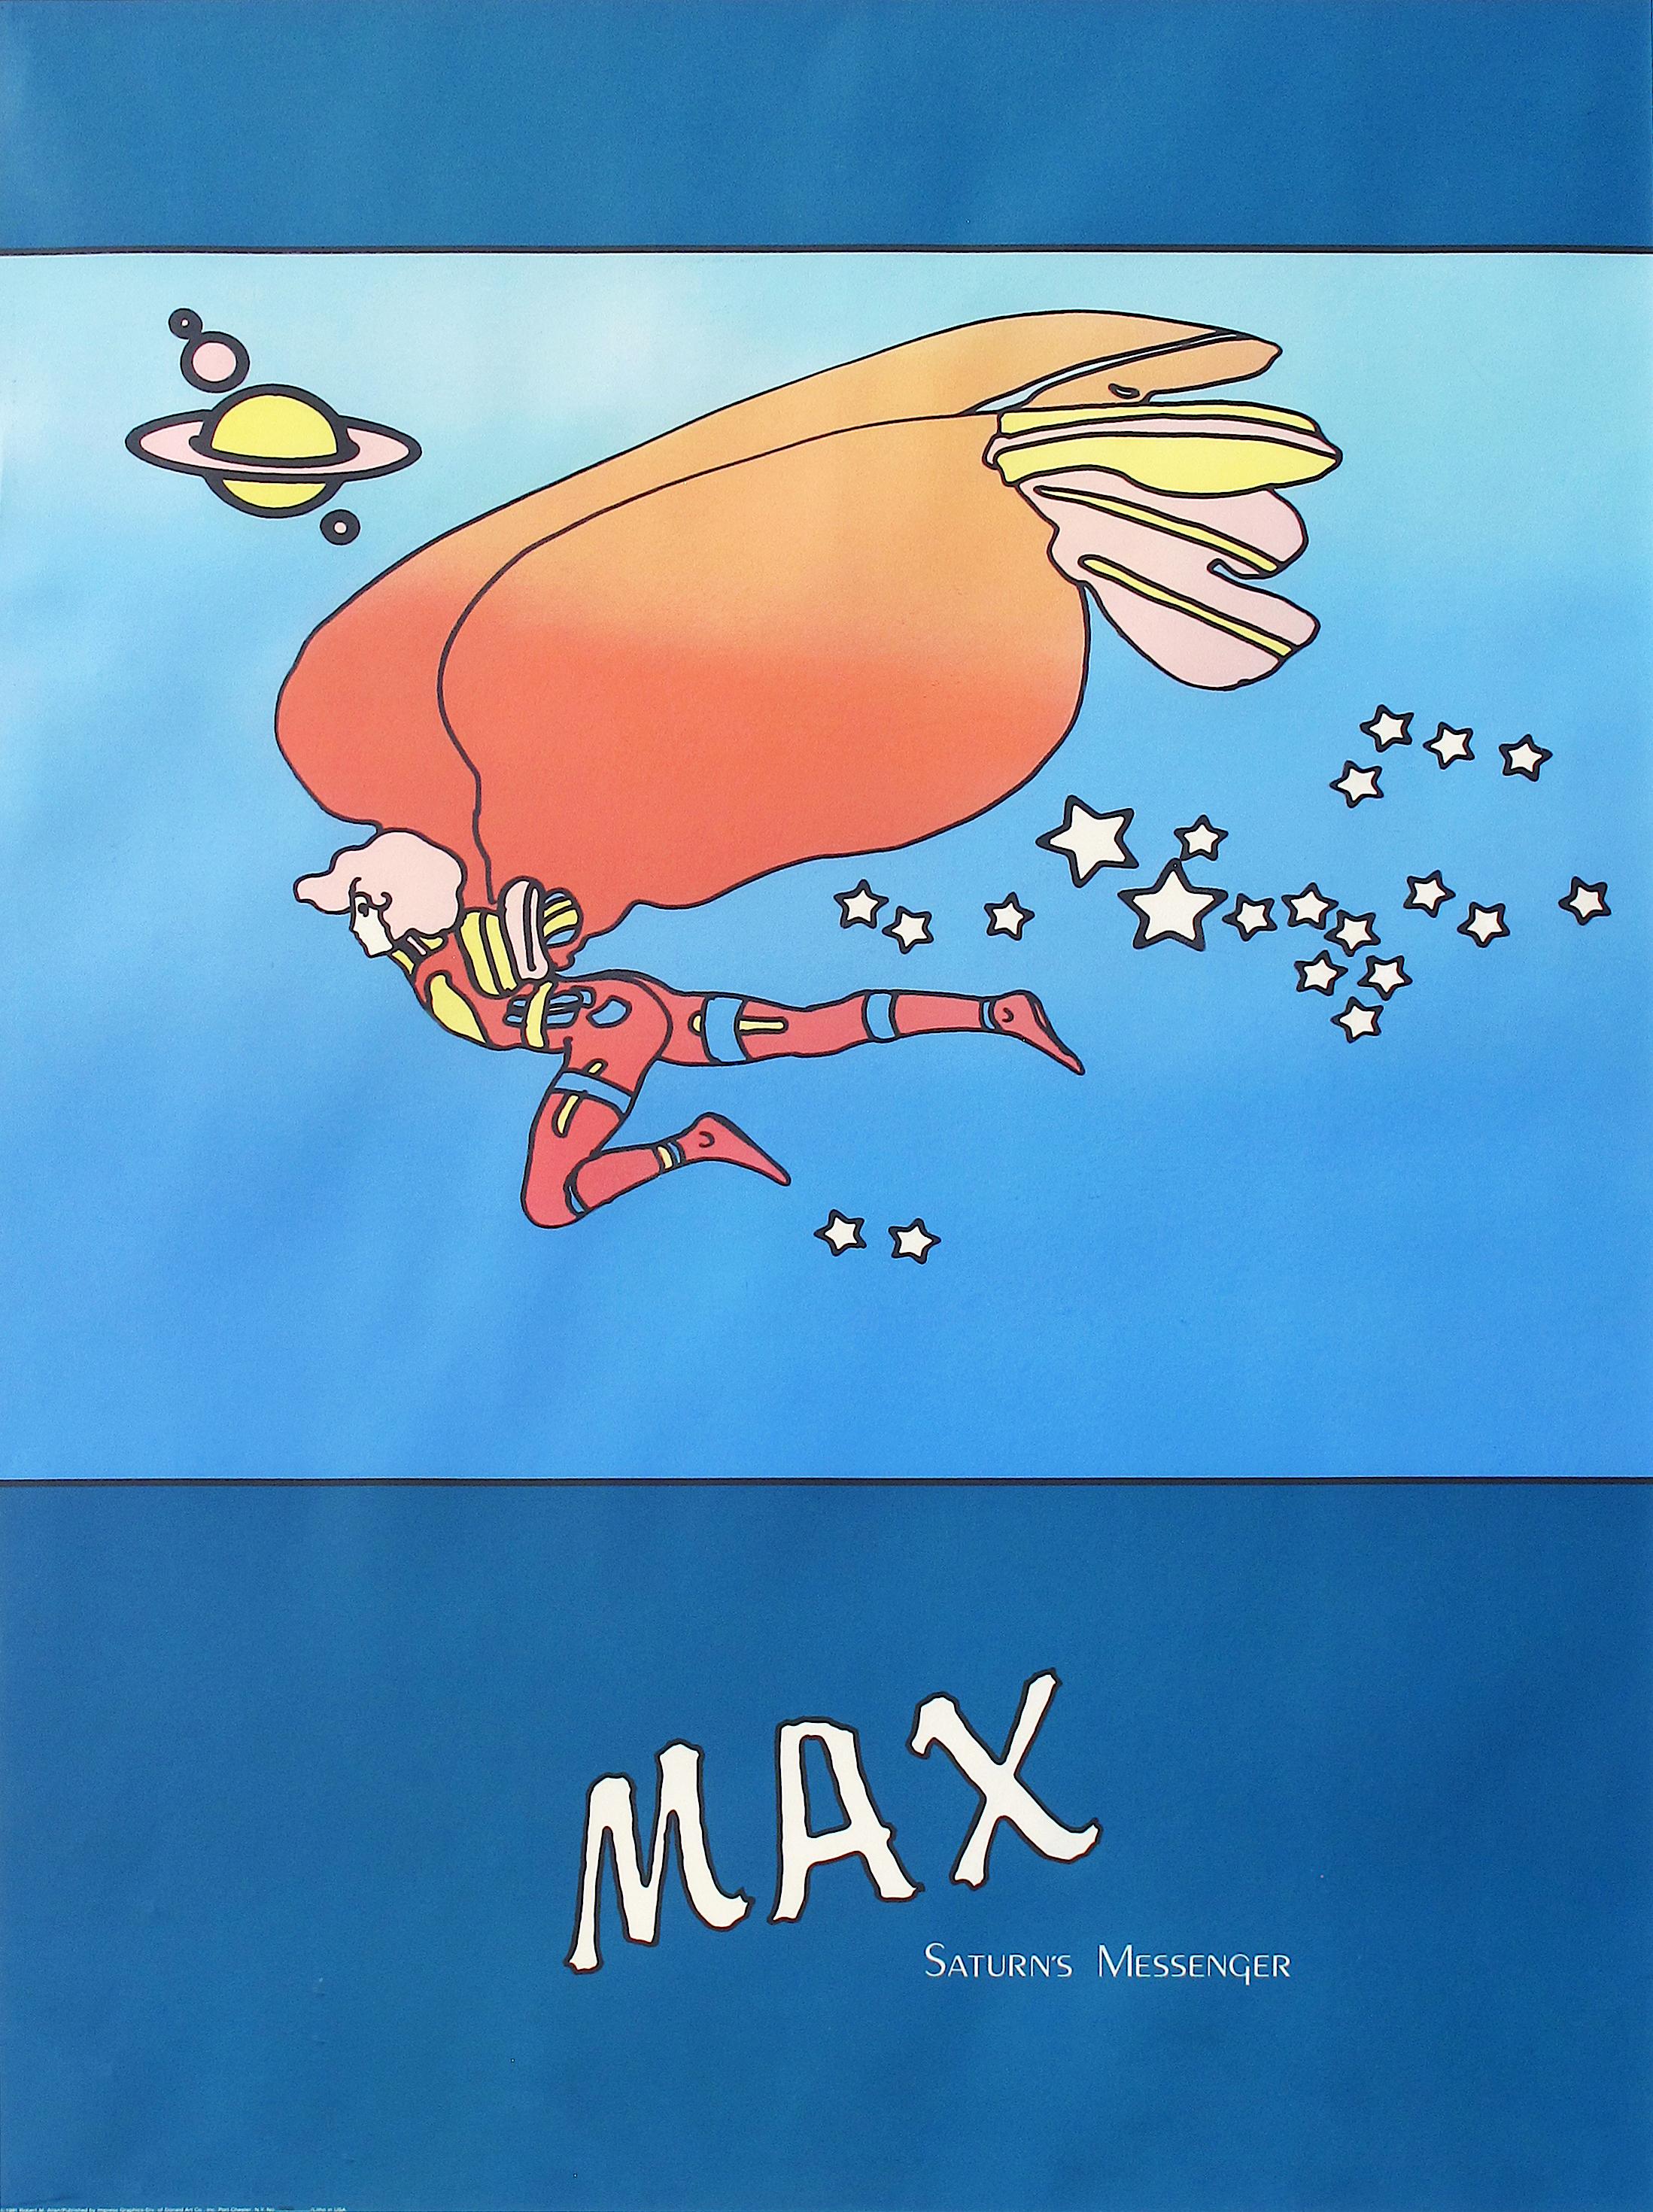 Peter Max Animal Print - Saturns Messenger 